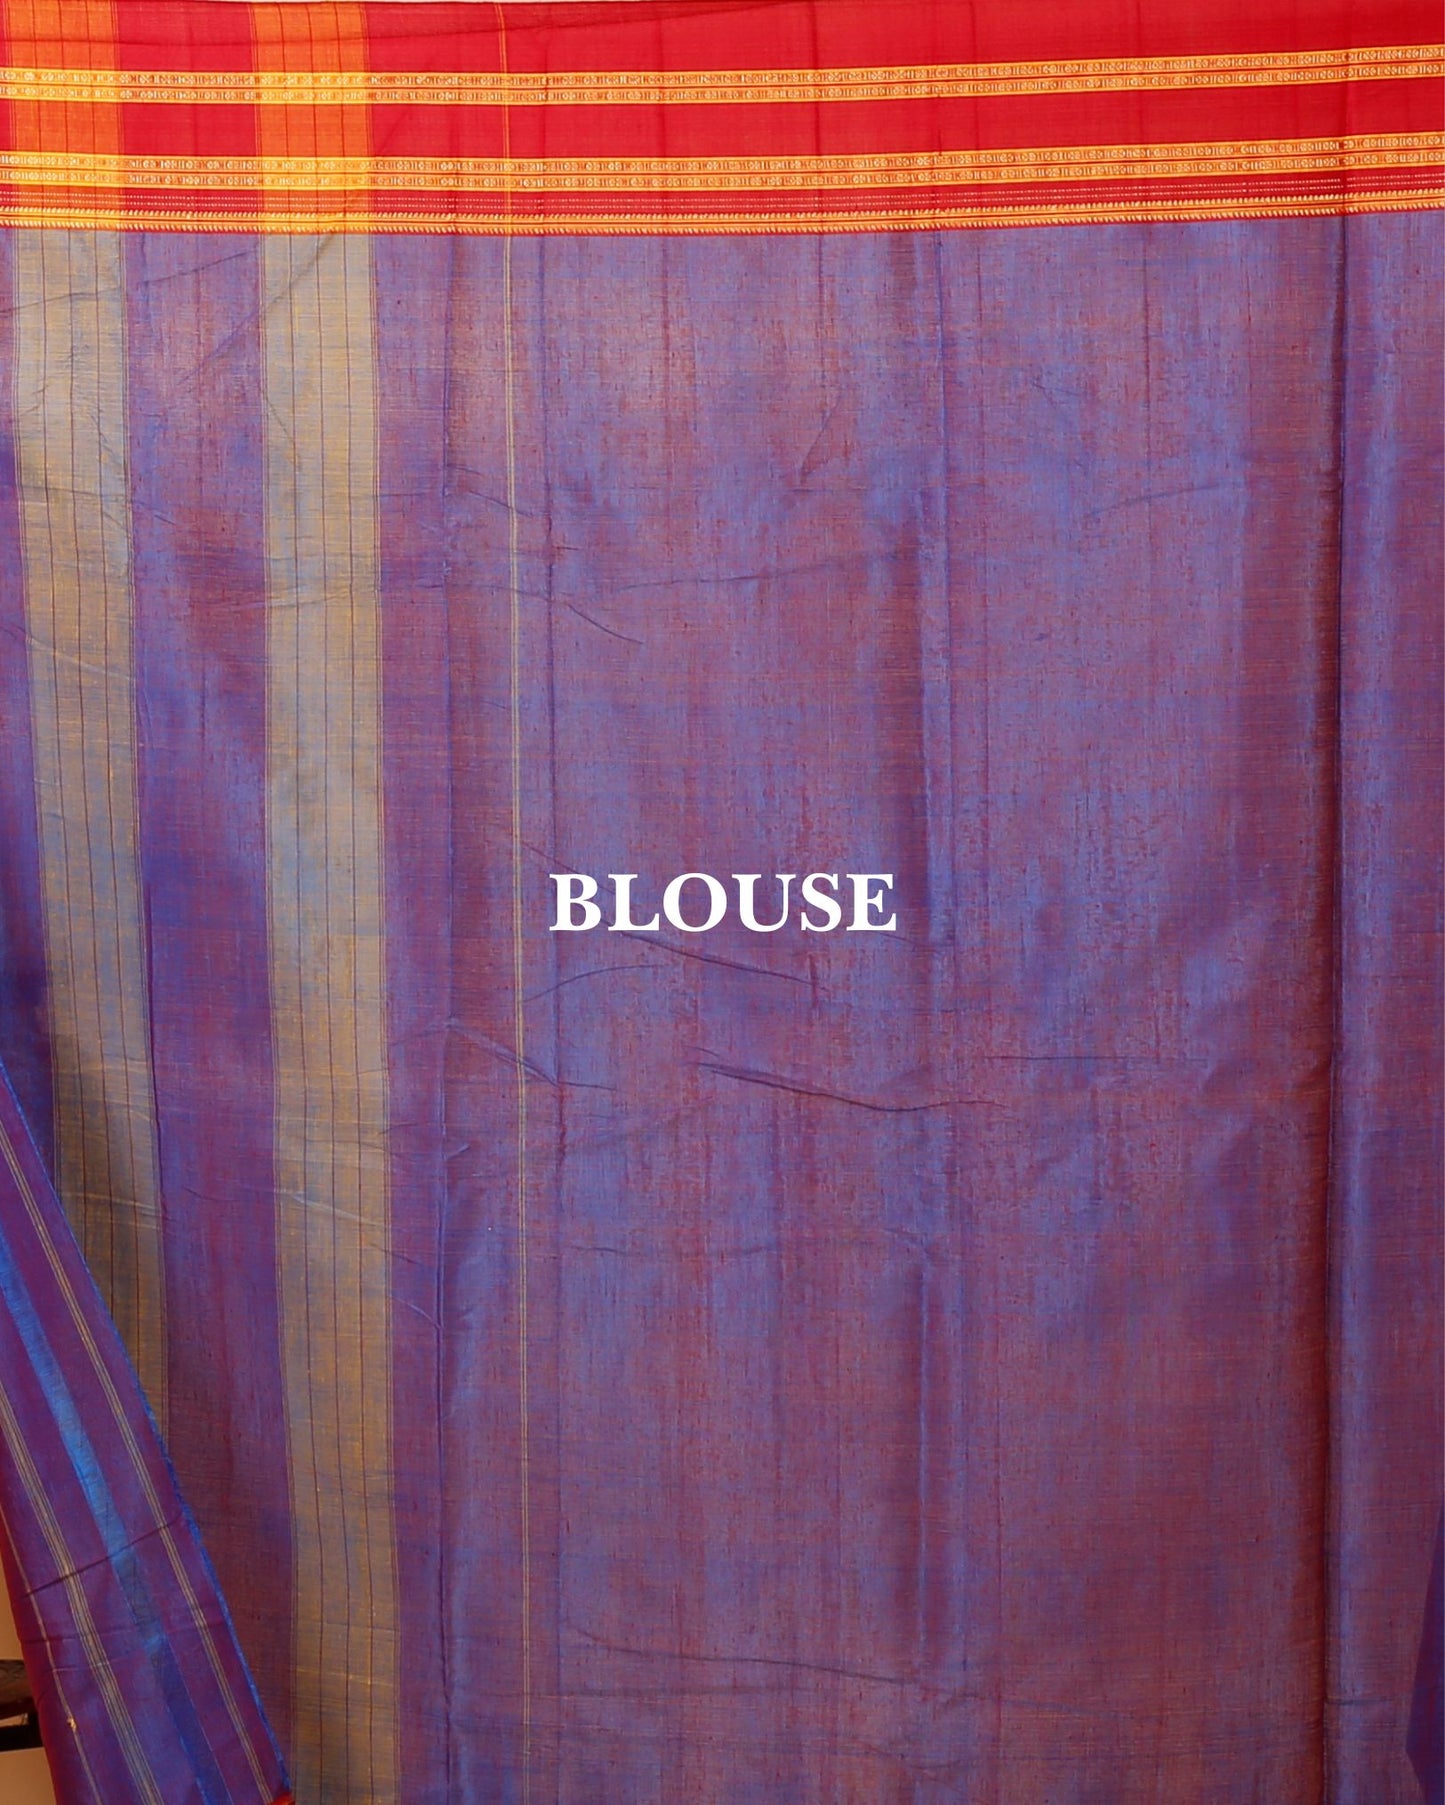 ILKAL Handloom Cotton Silk Saree Faded Purple Color with running blouse - IndieHaat